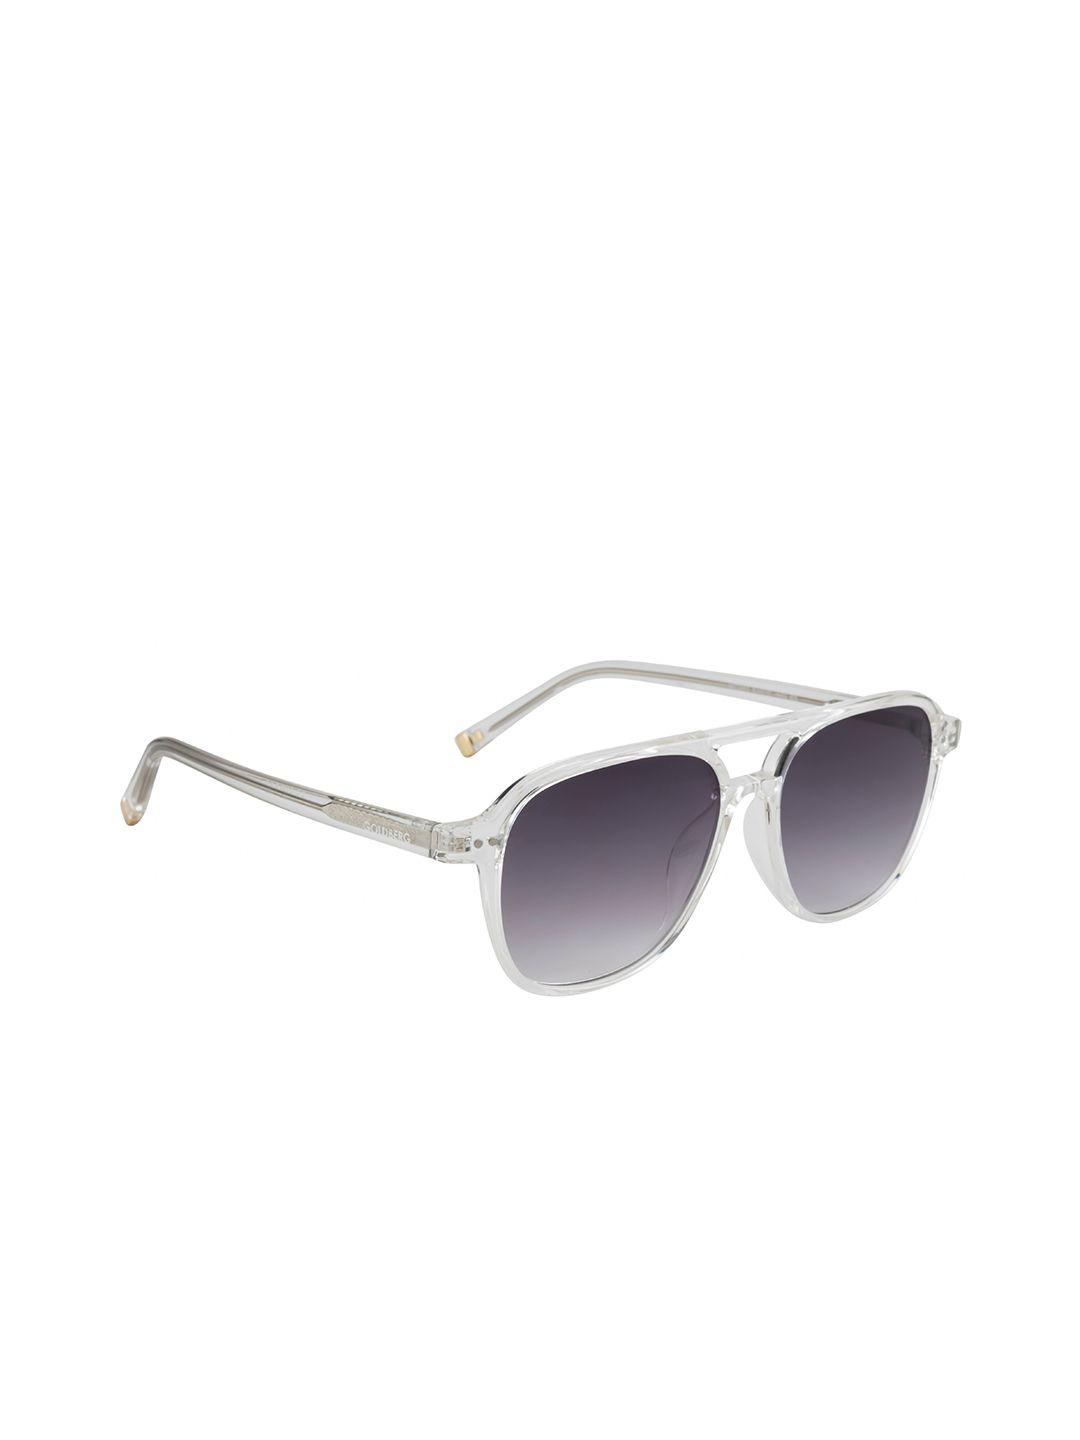 gold berg unisex grey lens & gunmetal-toned aviator sunglasses with uv protected lens